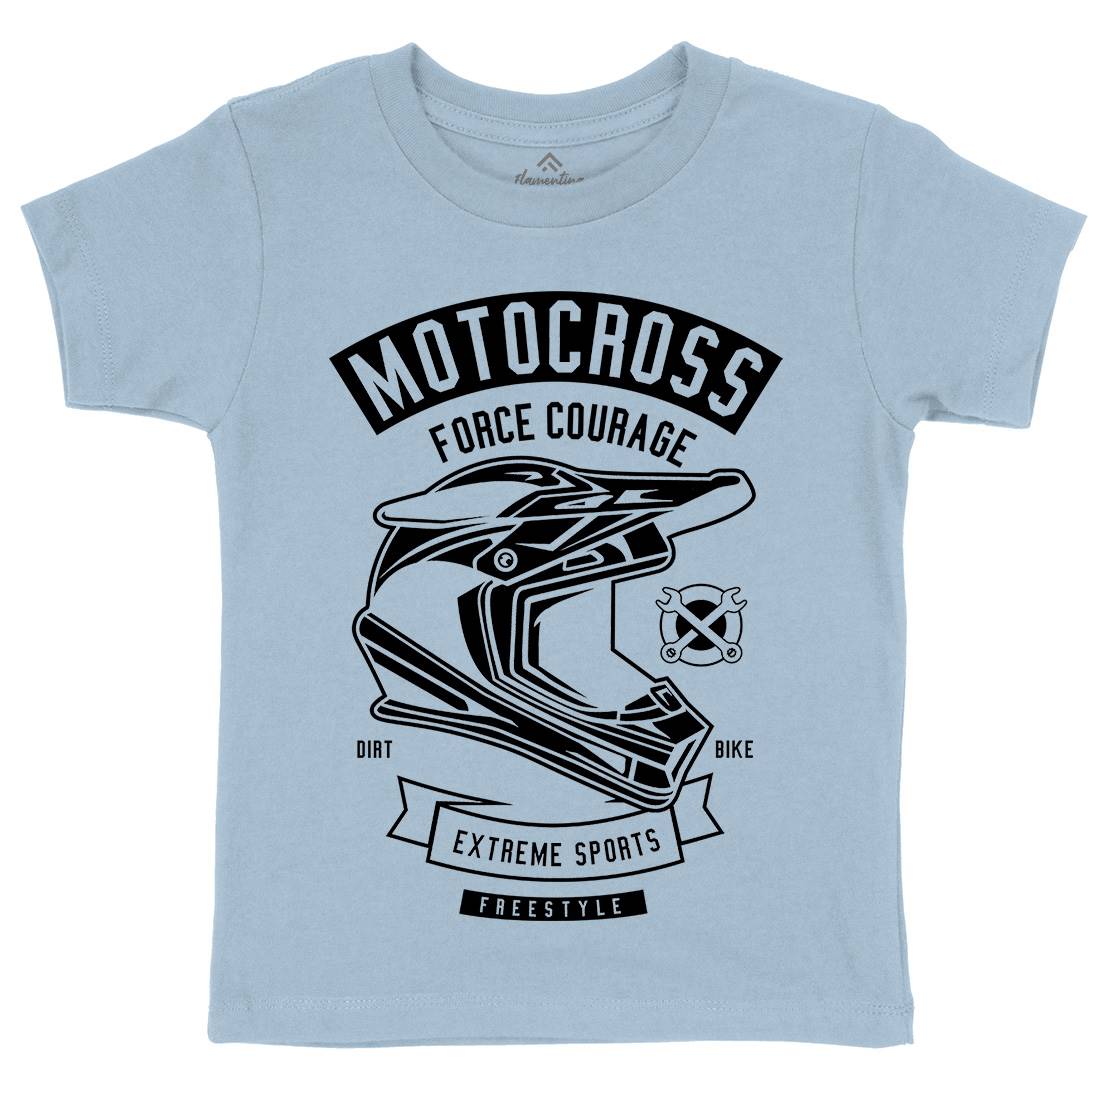 Motocross Force Courage Kids Organic Crew Neck T-Shirt Motorcycles B576